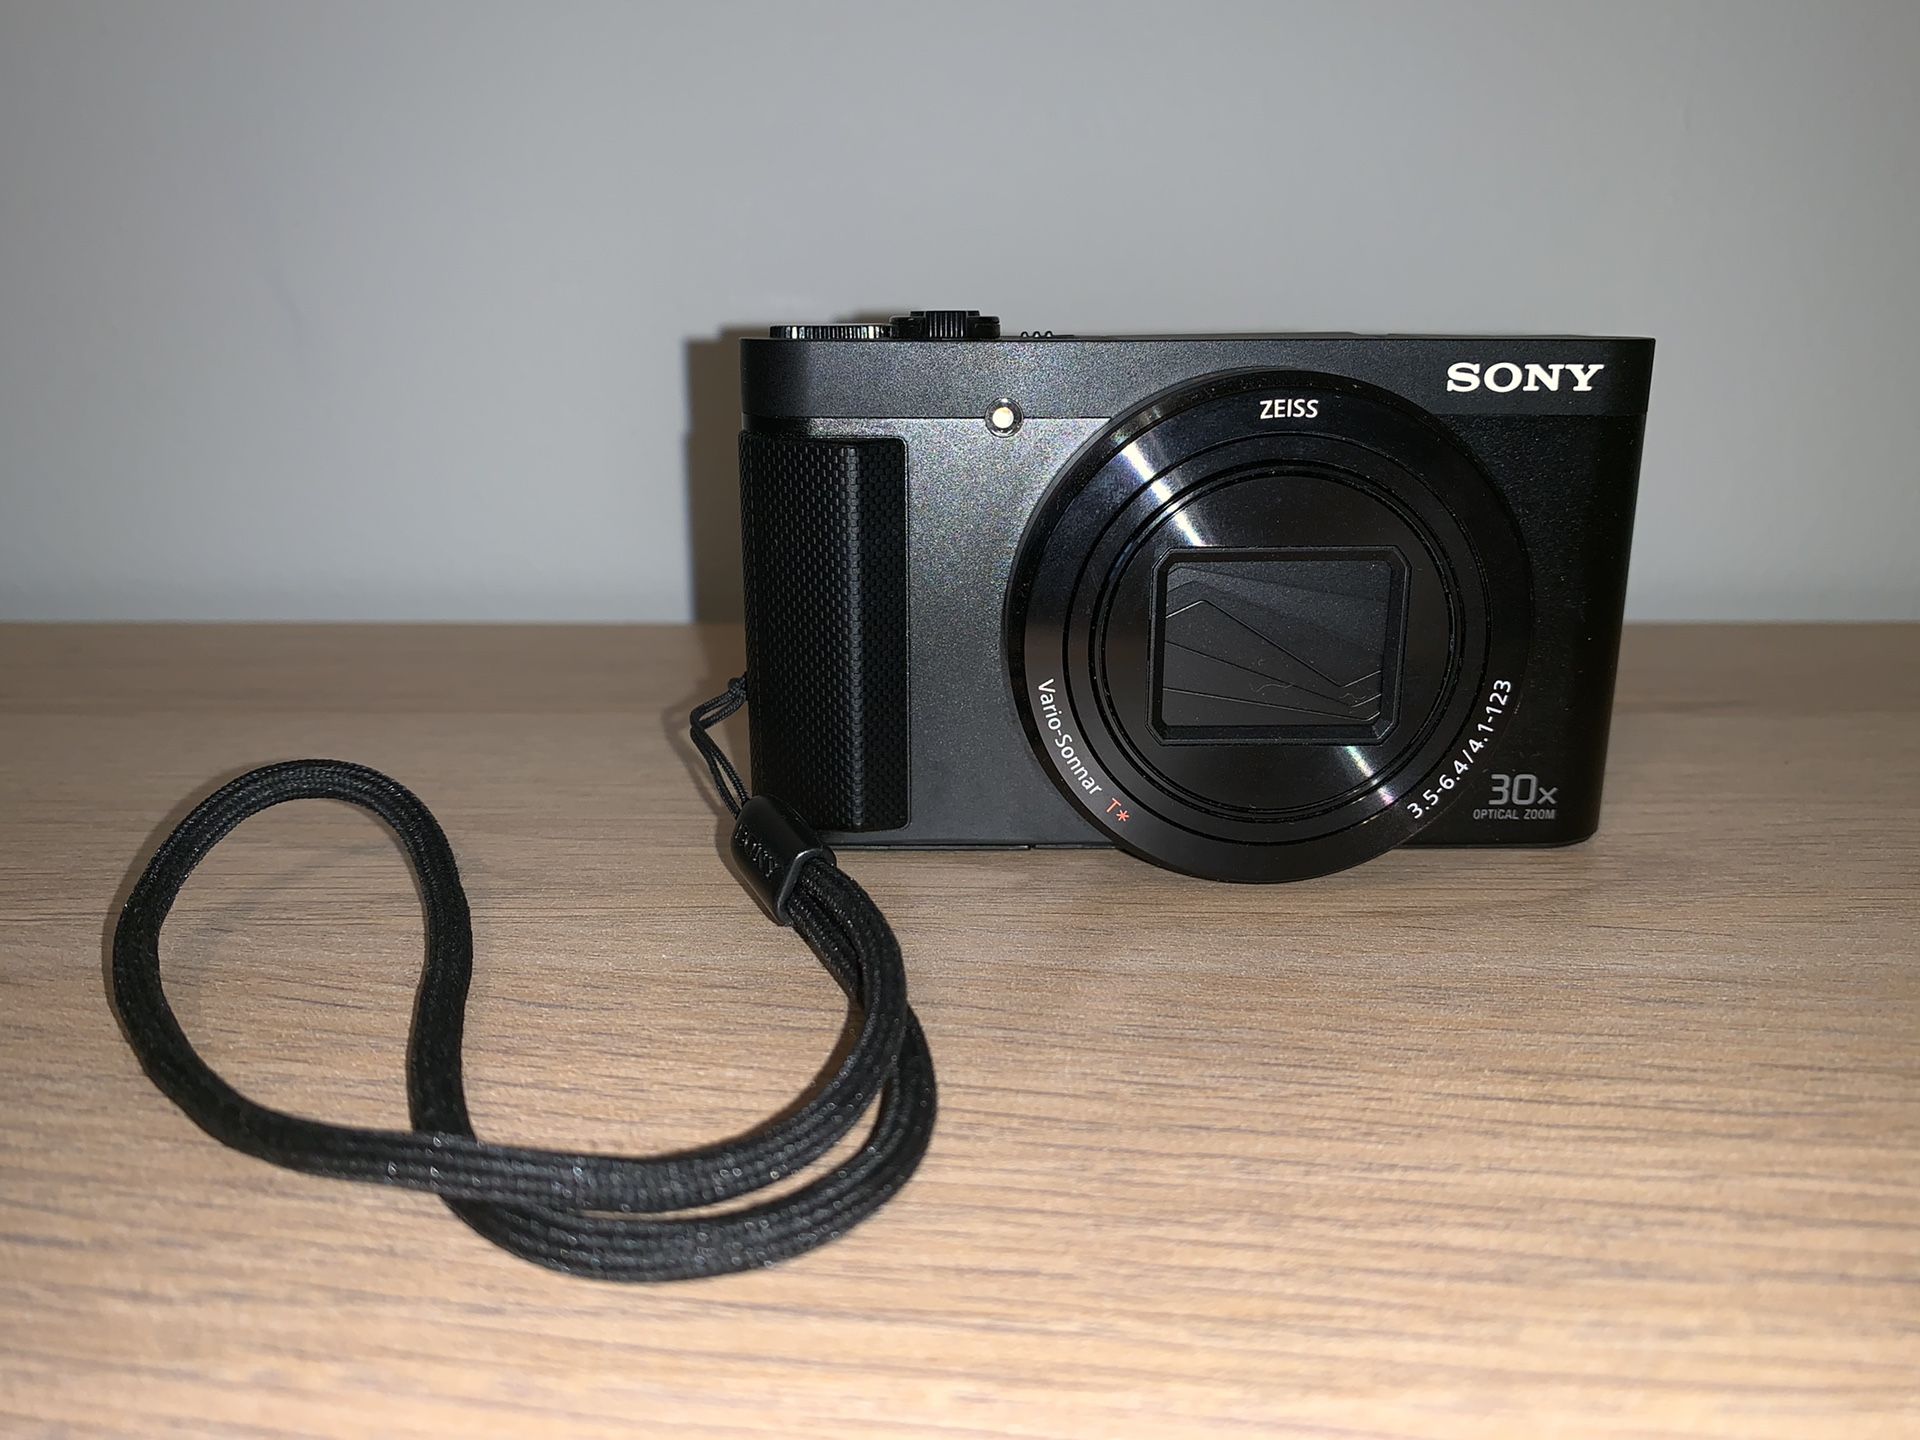 Sony Cybershot Dsc HX80 Camera